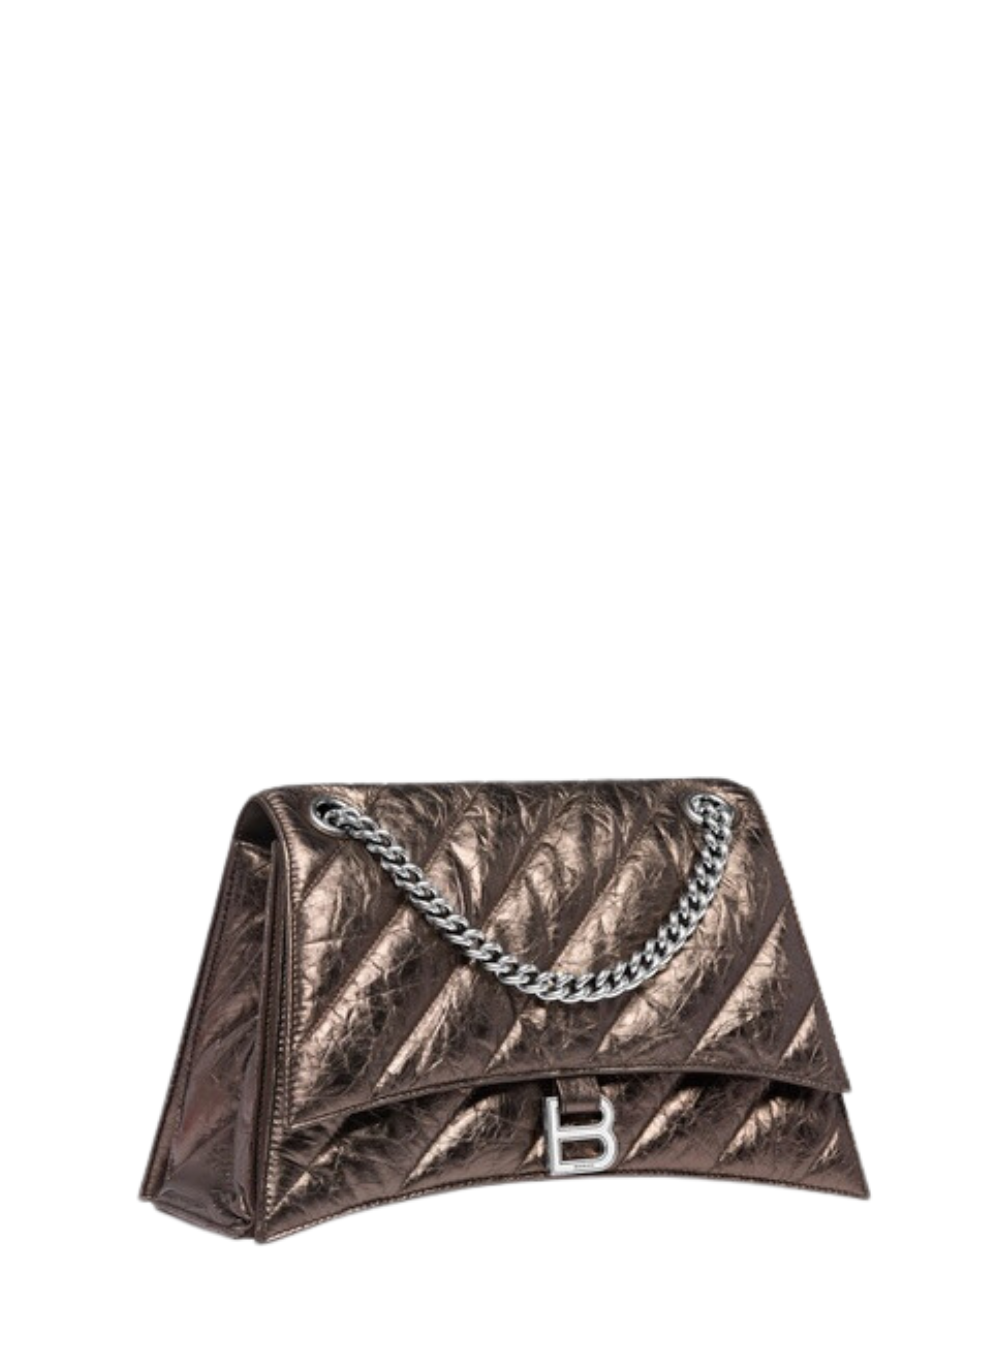 Balenciaga Metallic Leather Crush Shoulder Bag - Brown - One Size